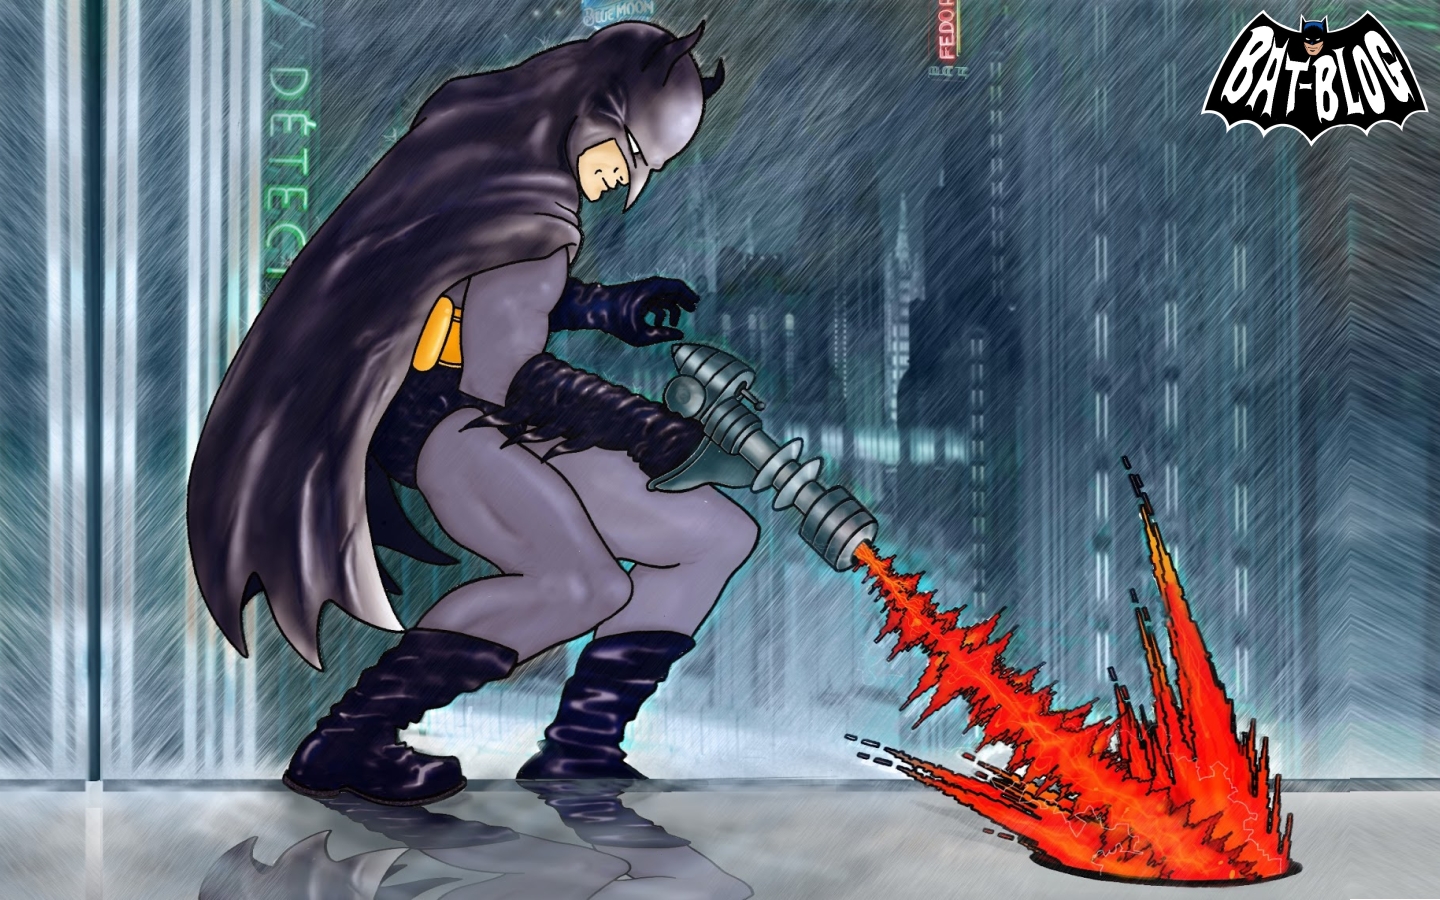 BAT - BLOG : BATMAN TOYS and COLLECTIBLES: April 2013